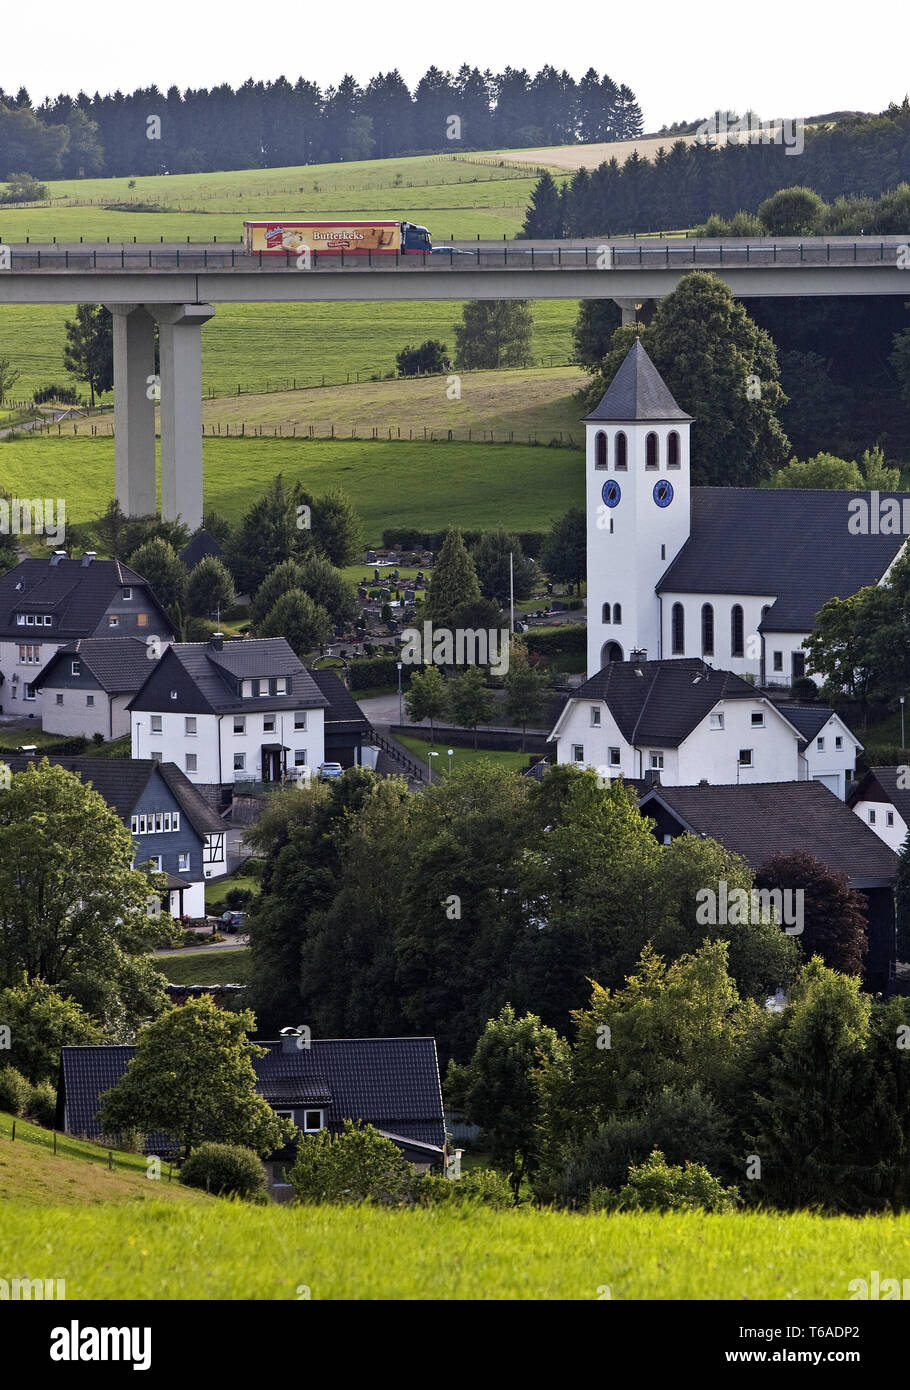 Bleche village and A45 motorway brigde, Drolshagen, Sauerland, Noth Rhine-Westphalia, Germany Stock Photo